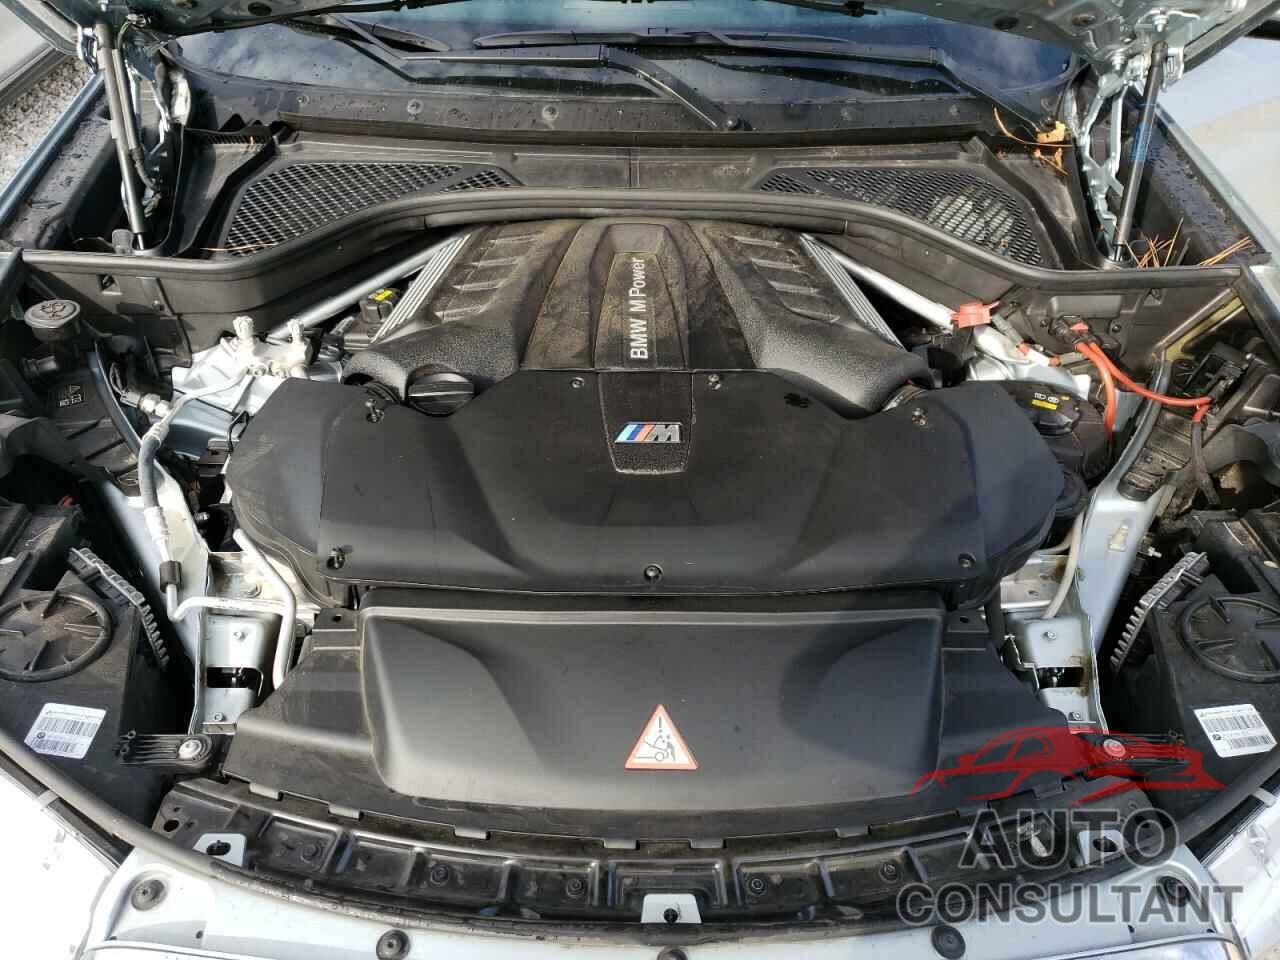 BMW X6 2019 - 5YMKW8C5XK0Y75030